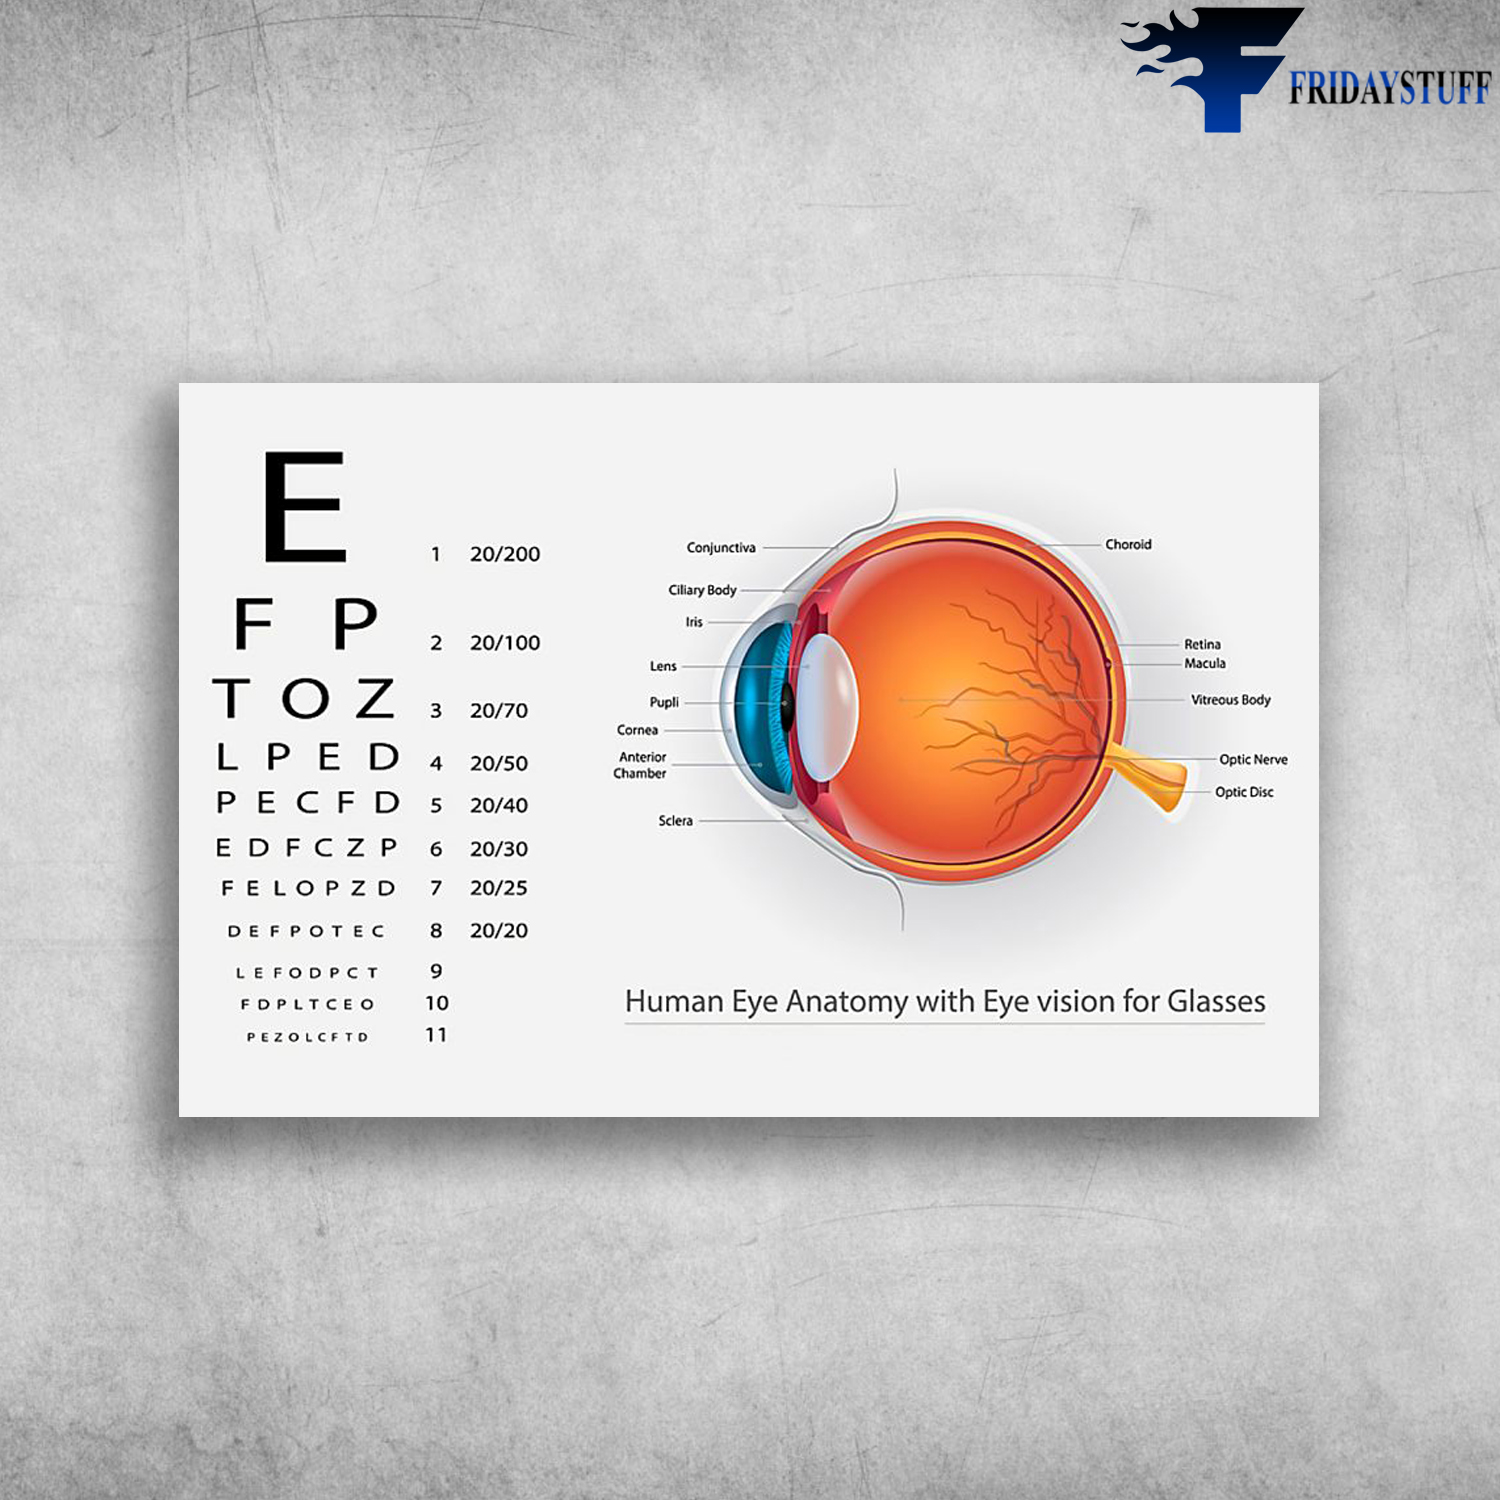 Human Eye Anatomy With Eye Vision For Glasses